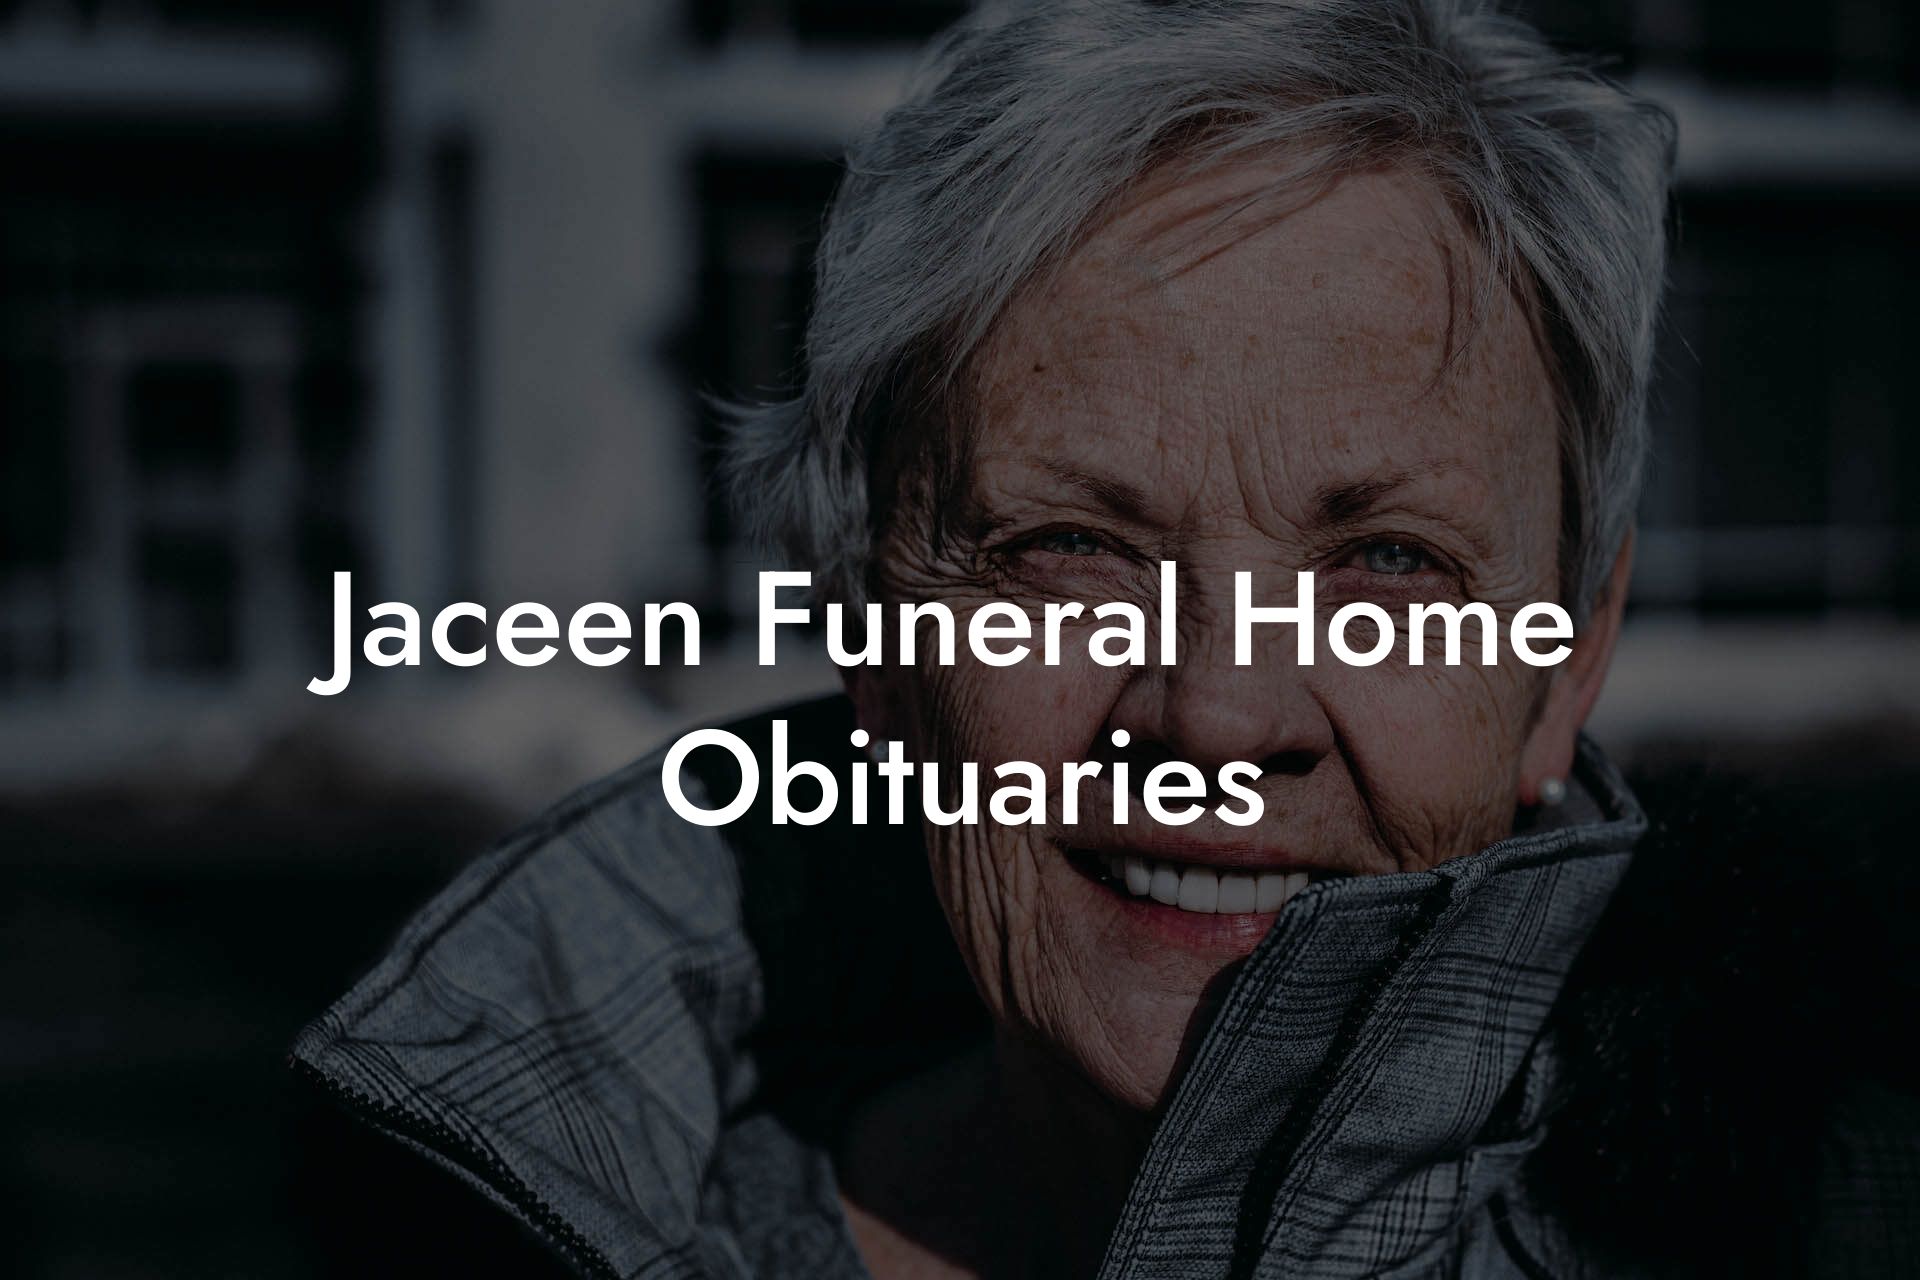 Jaceen Funeral Home Obituaries